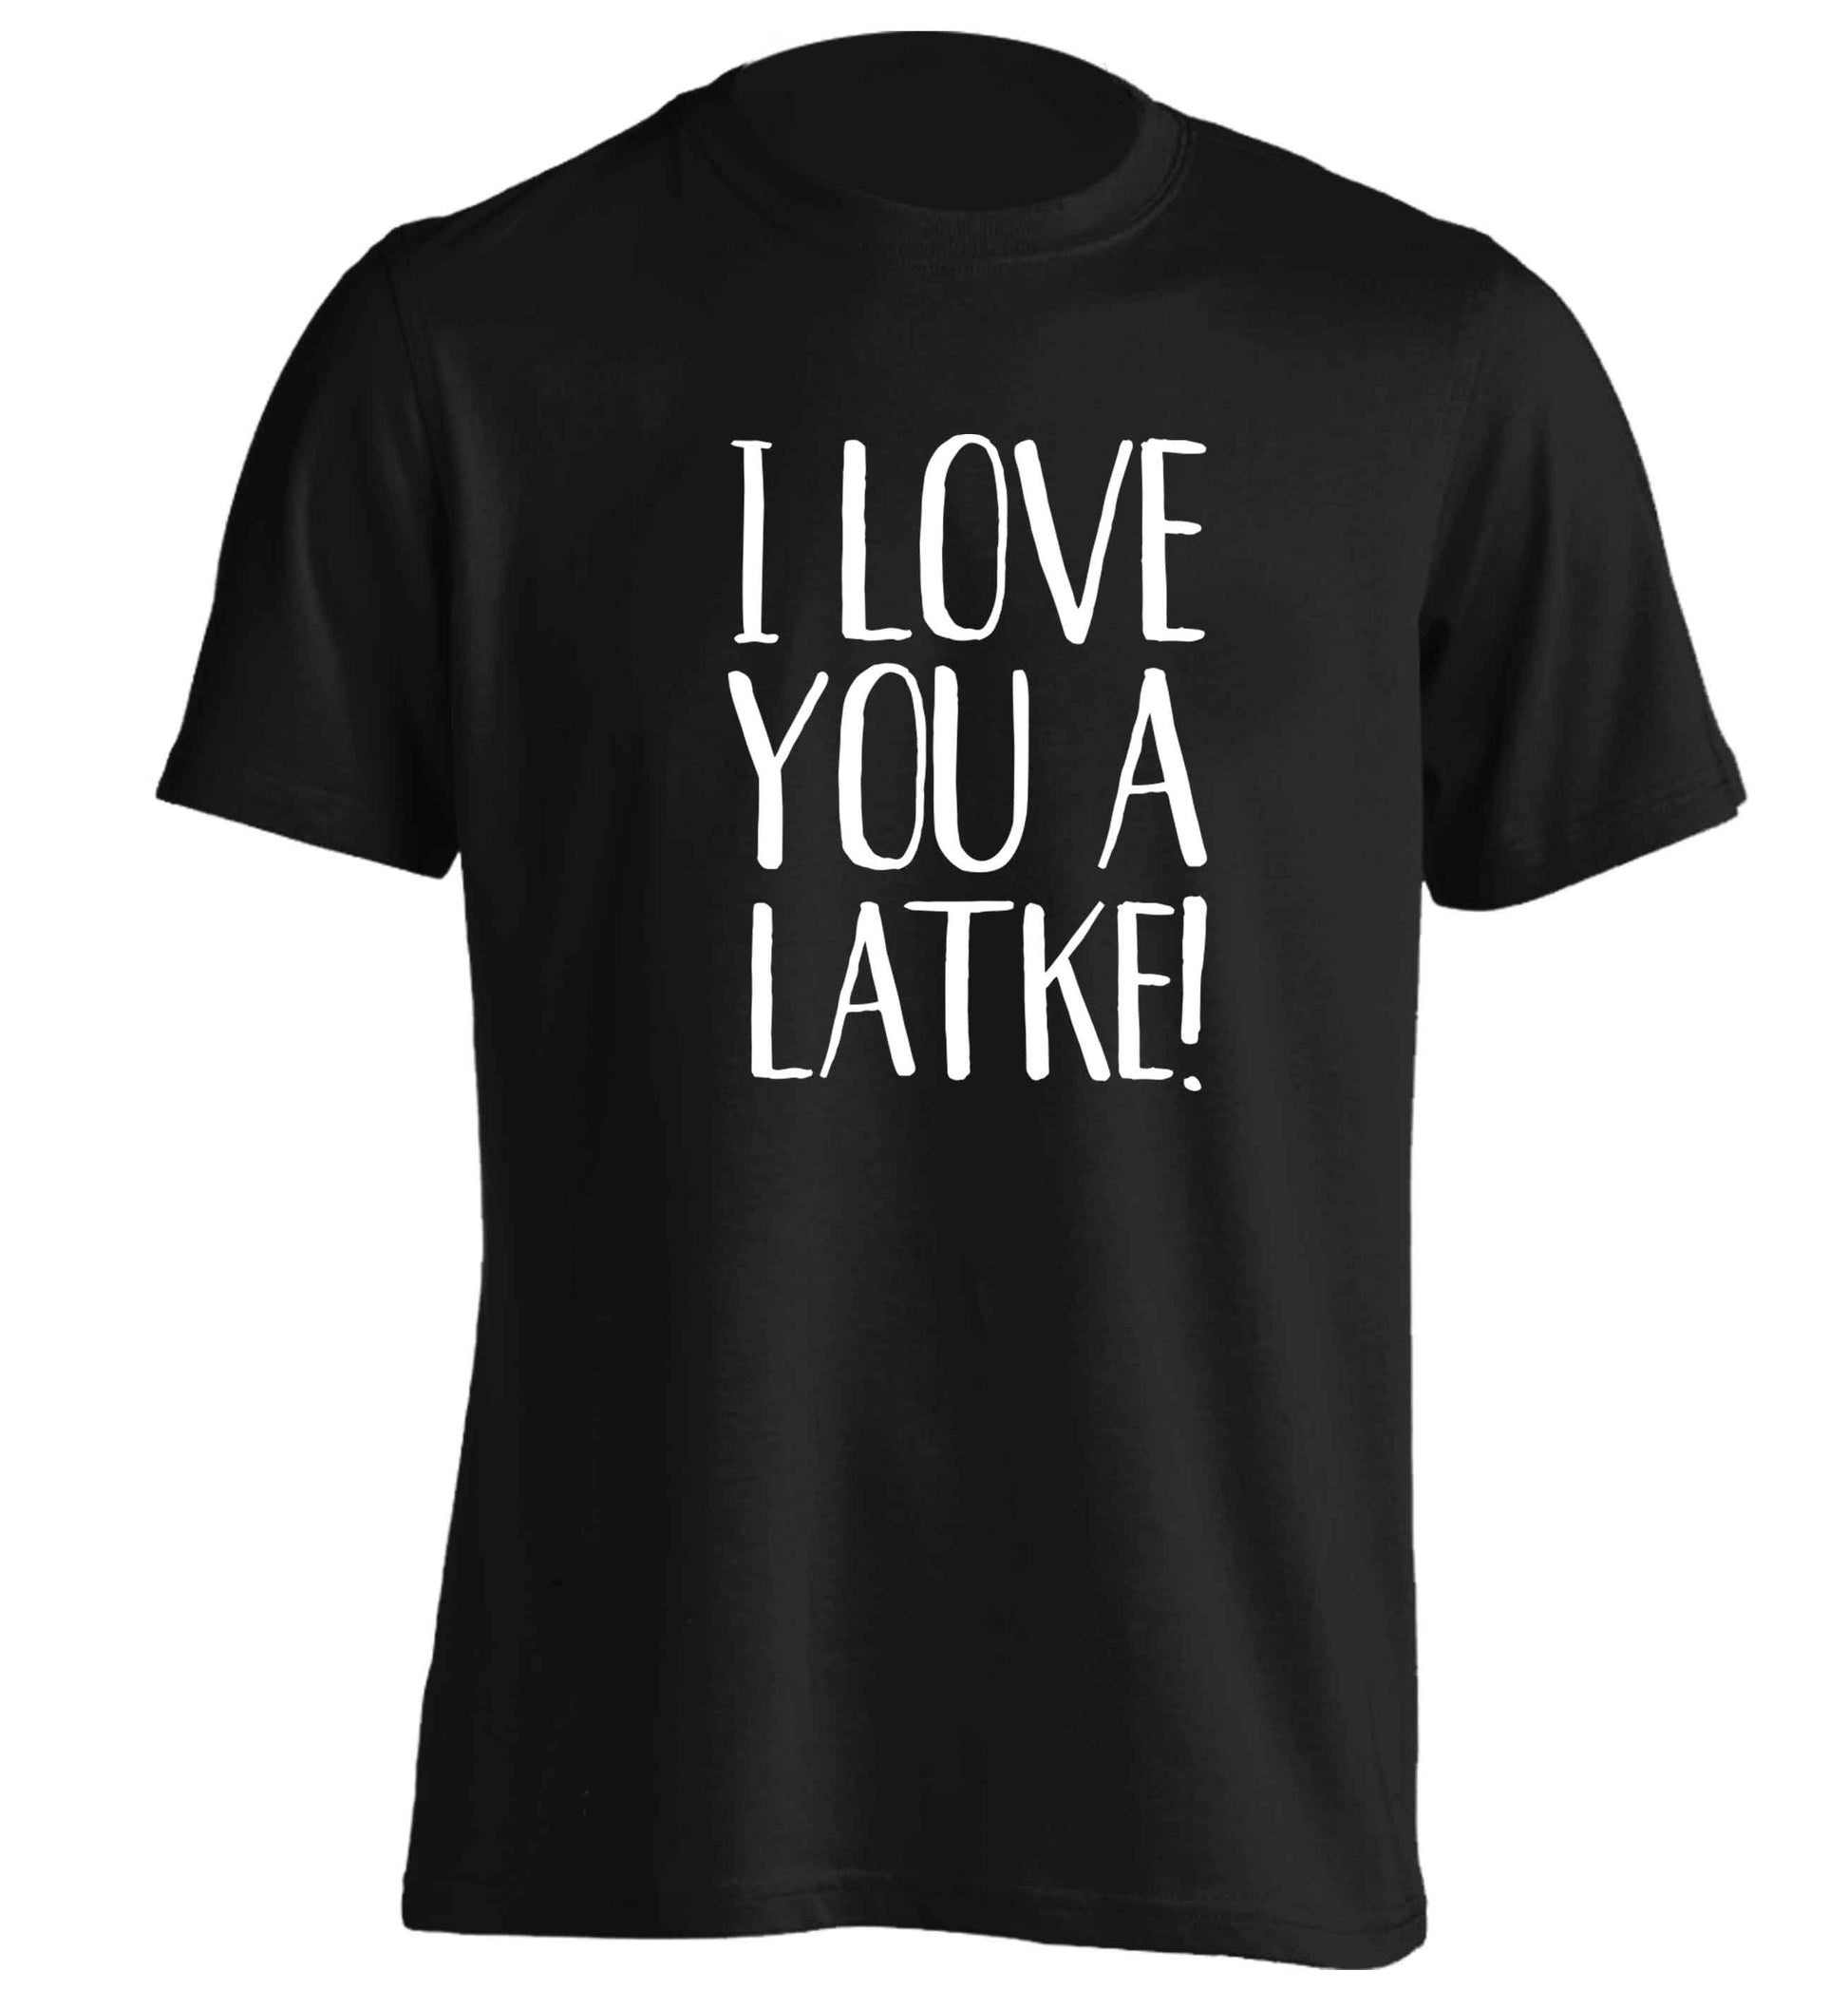 I love you a latke! adults unisex black Tshirt 2XL